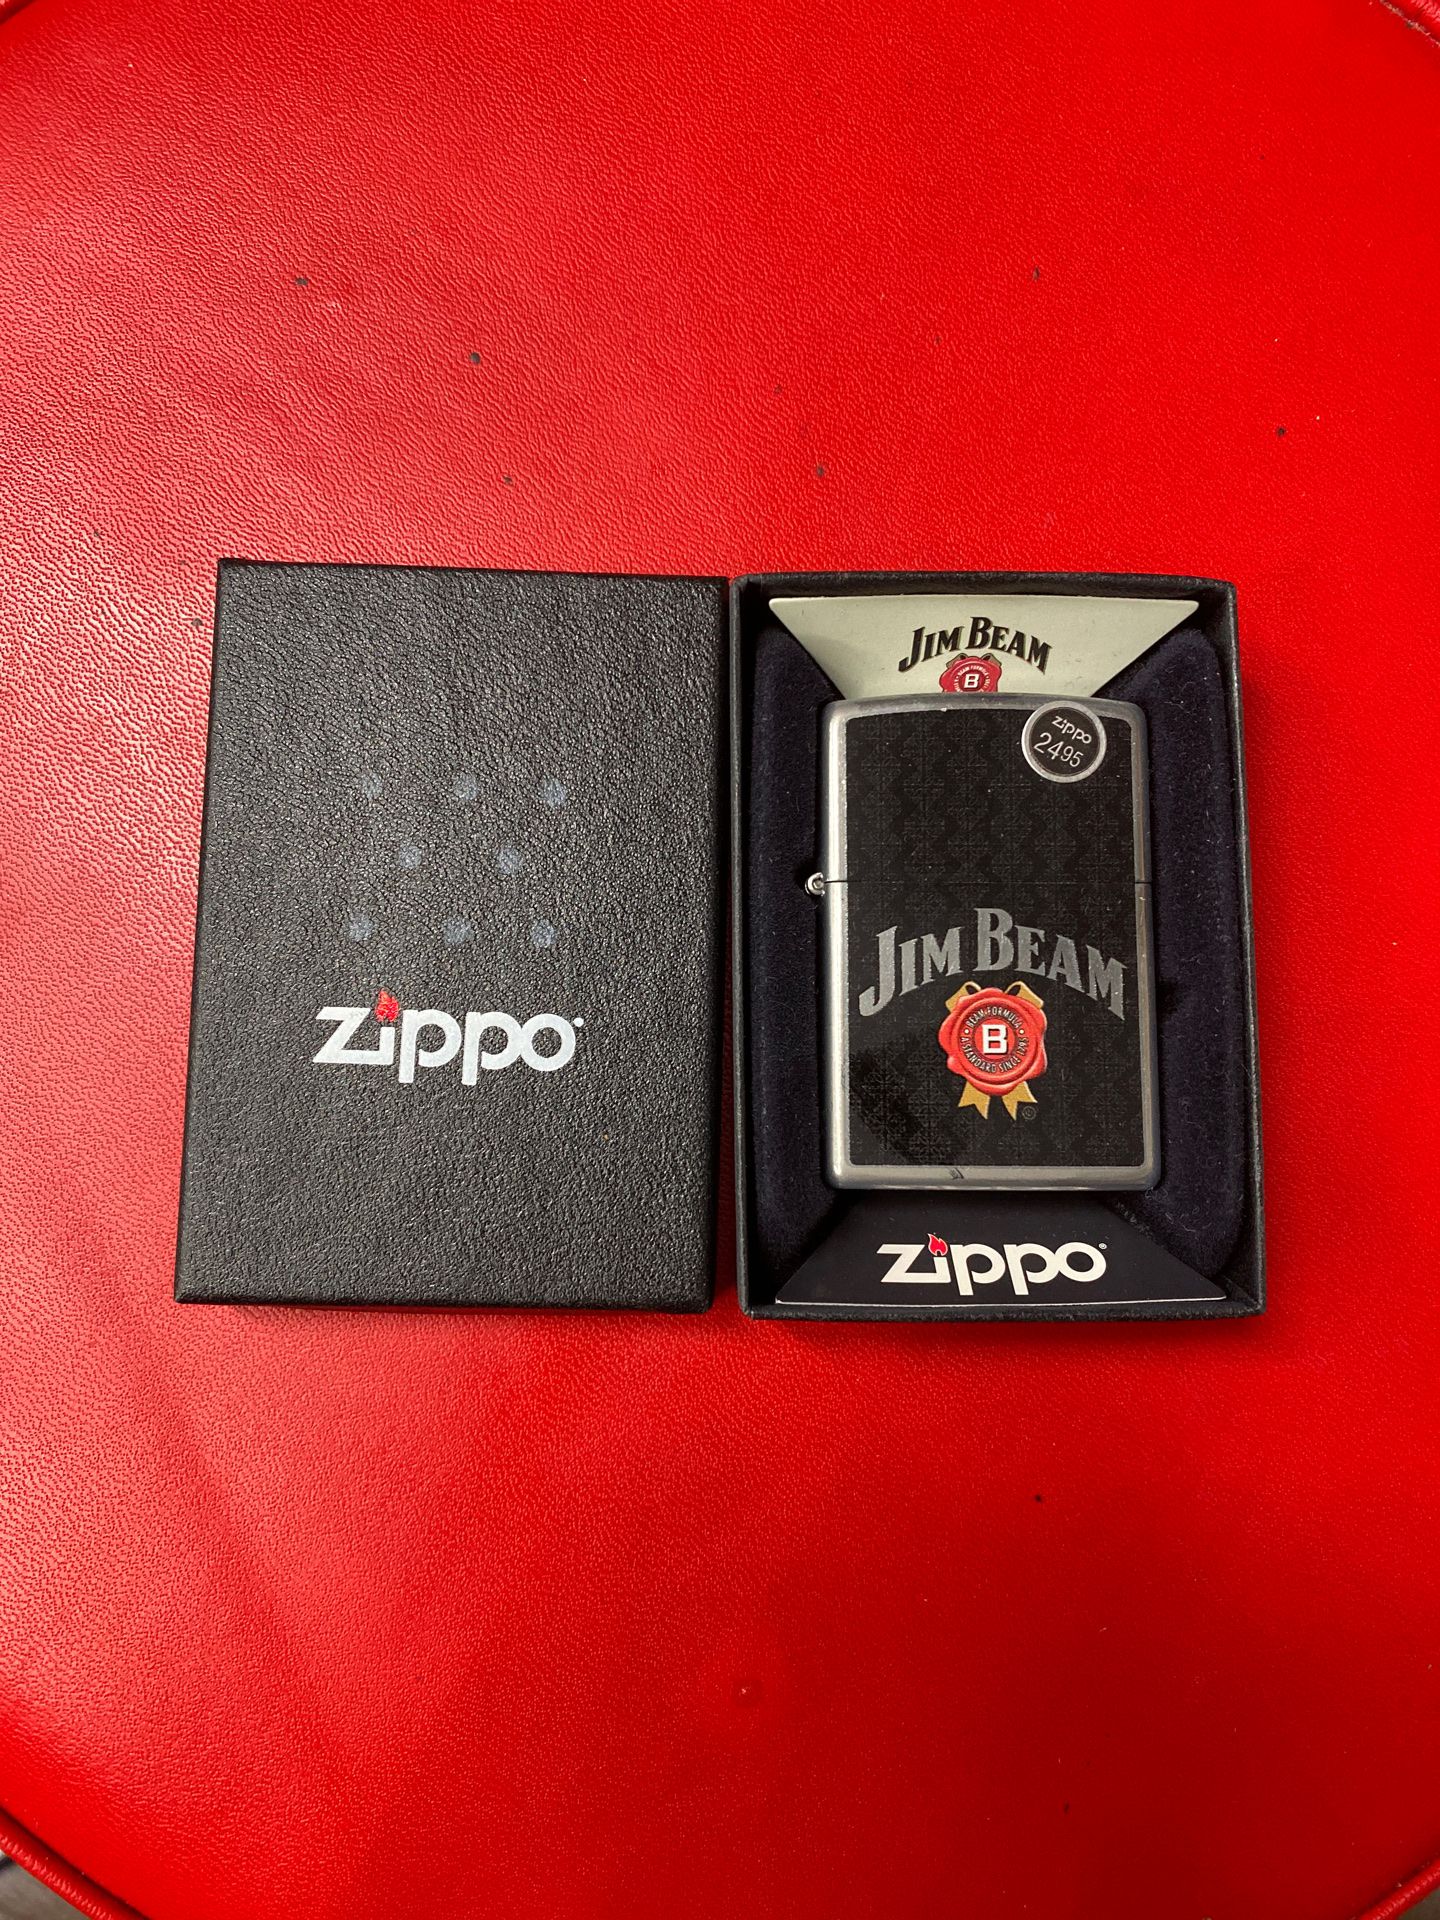 Jim Beam zippo lighter